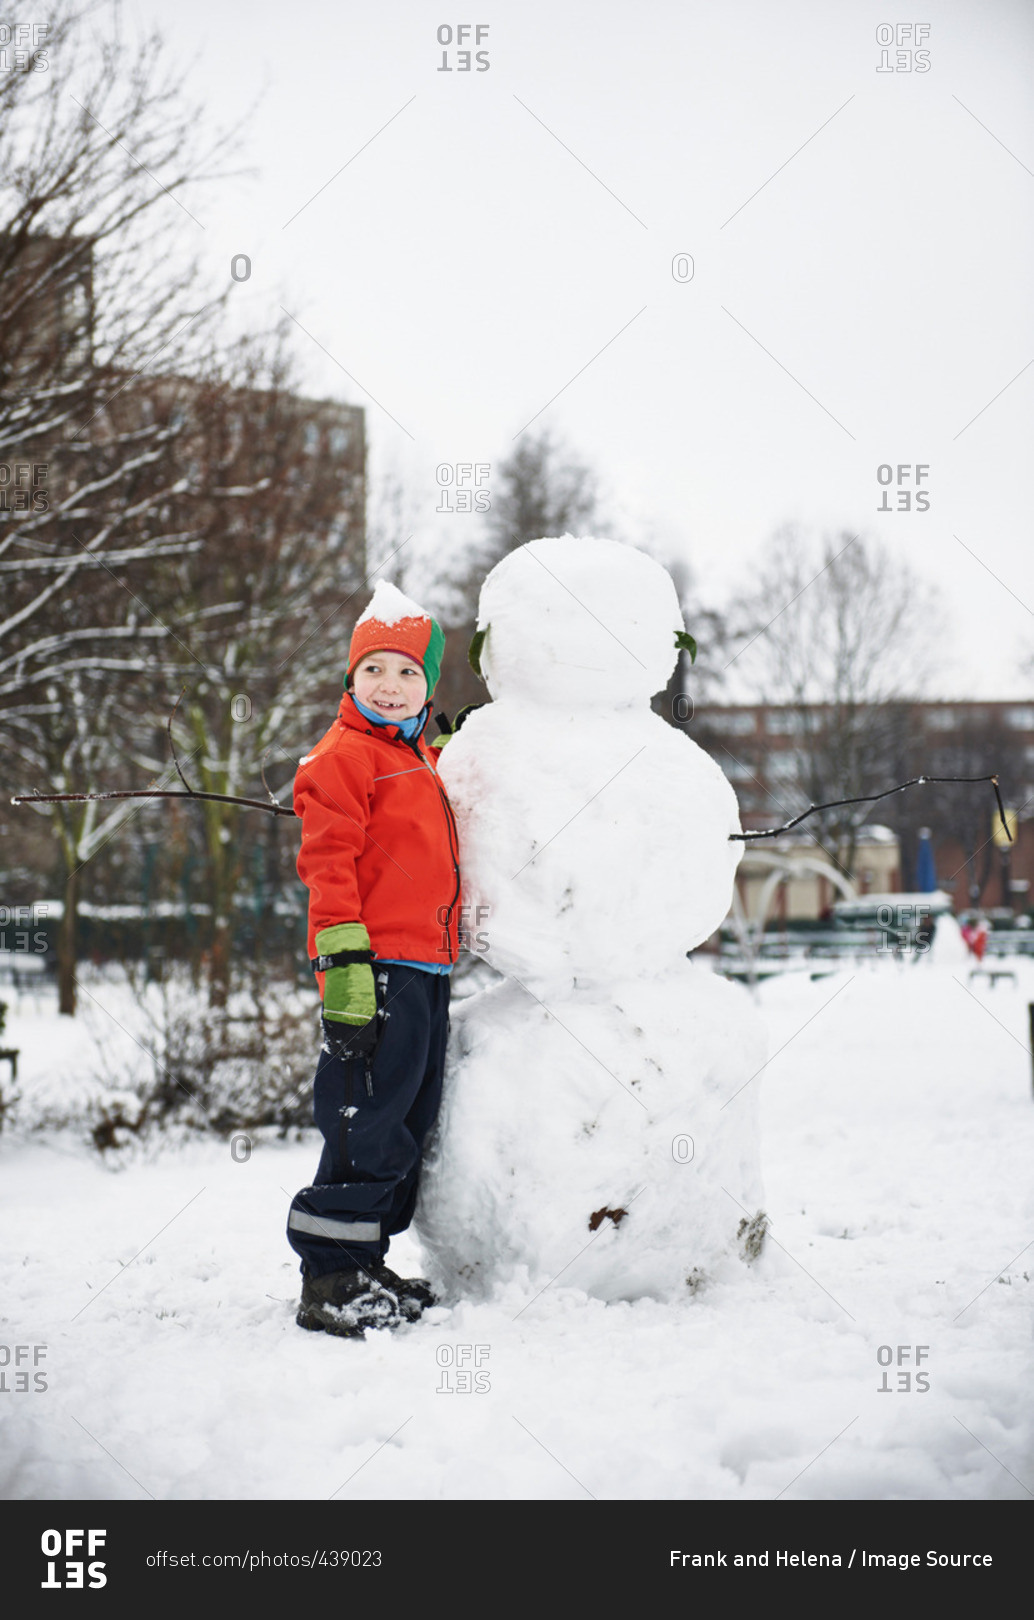 building a snowman stock photos - OFFSET